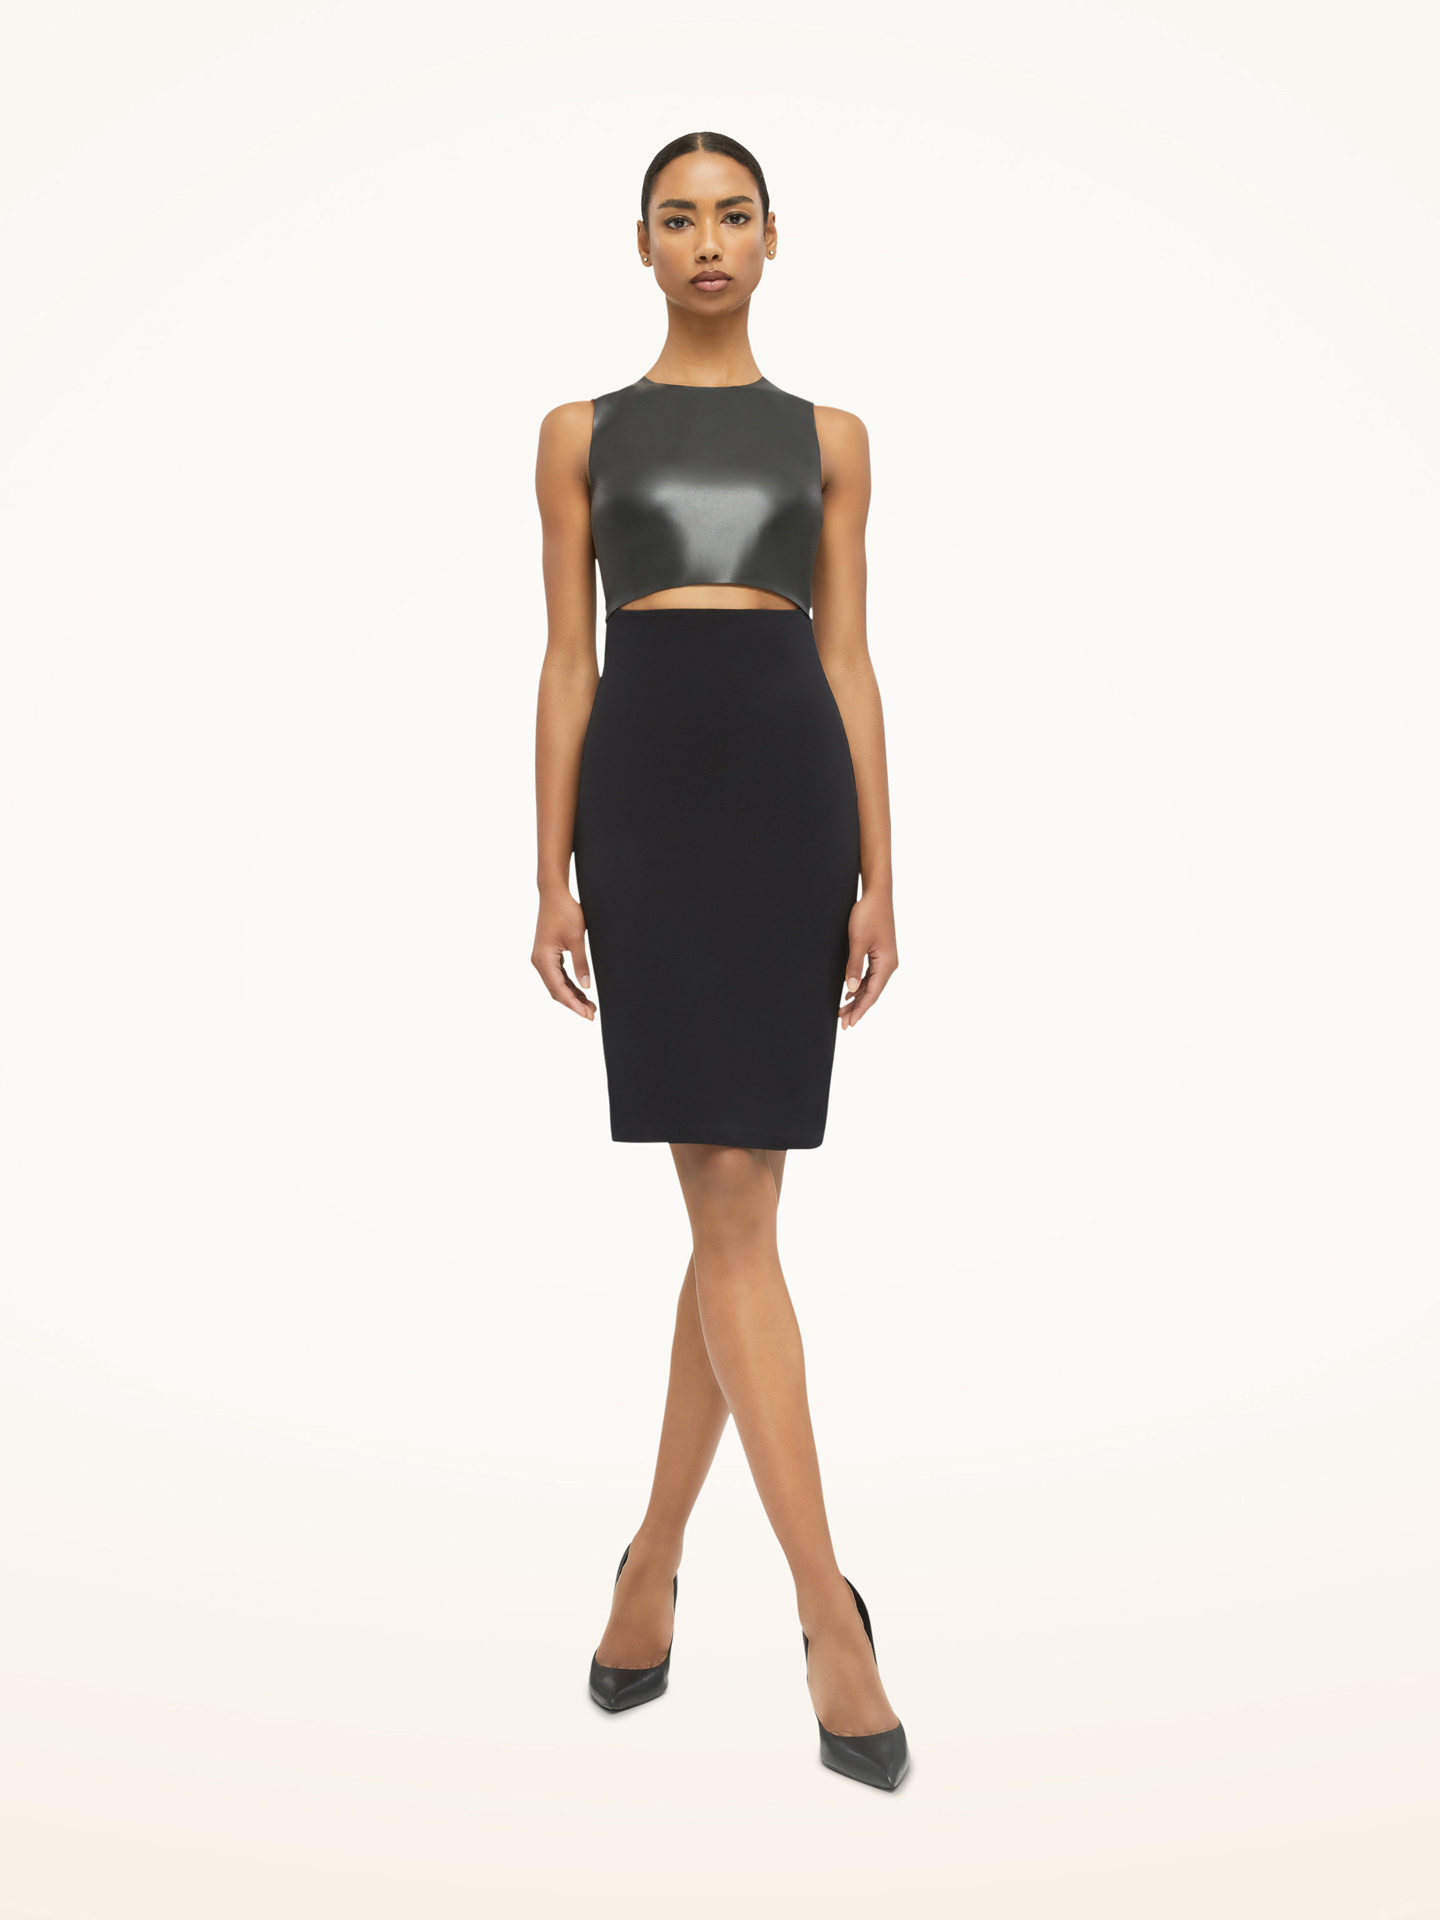 Wolford - Eco Vegan Dress, Frau, black, Größe: 38 von Wolford